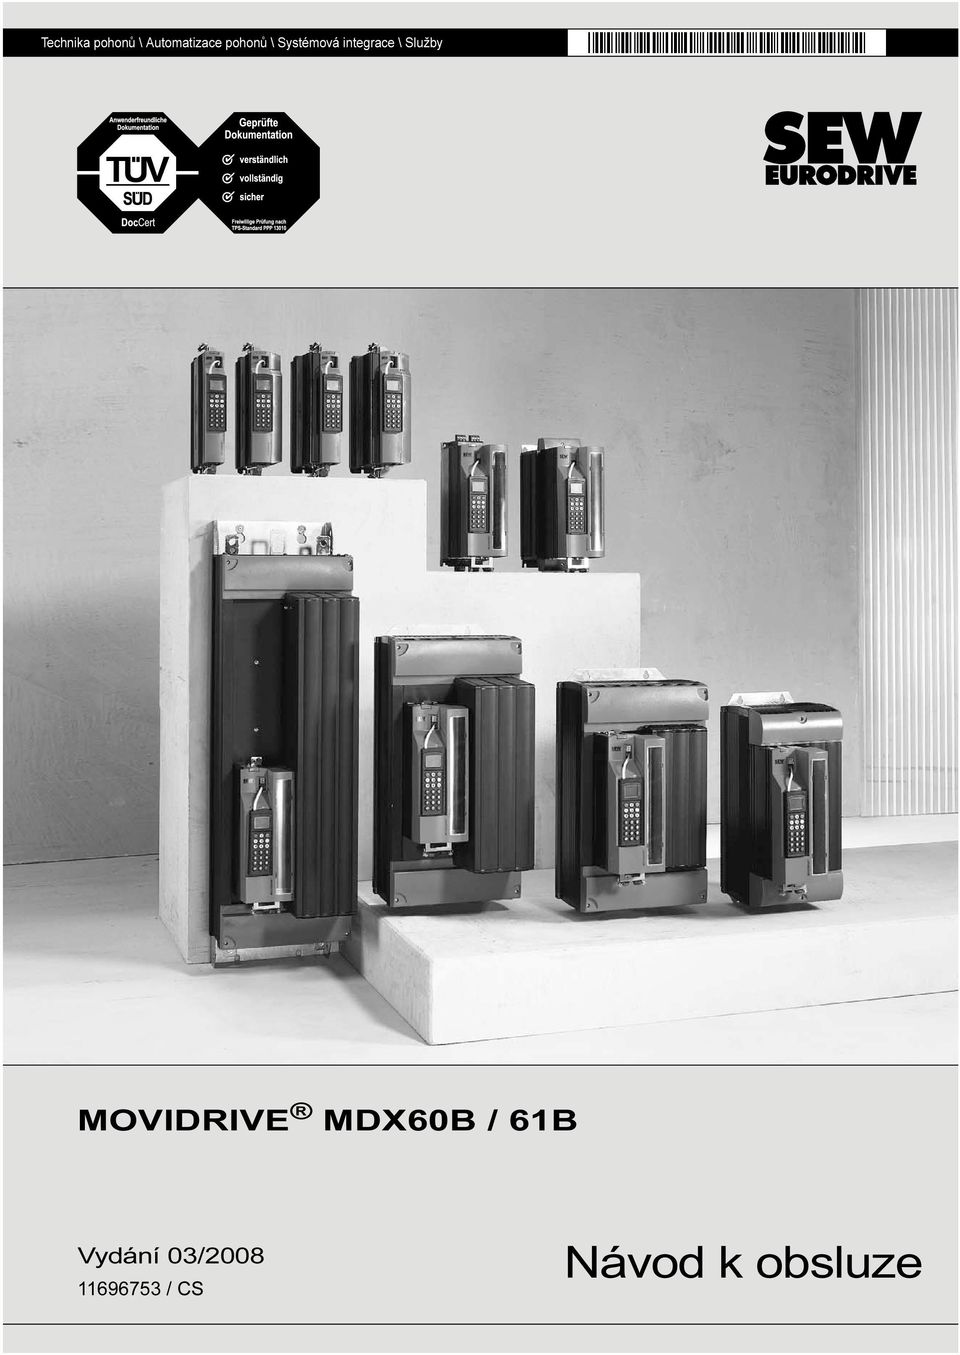 Služby MOVIDRIVE MDX60B / 61B